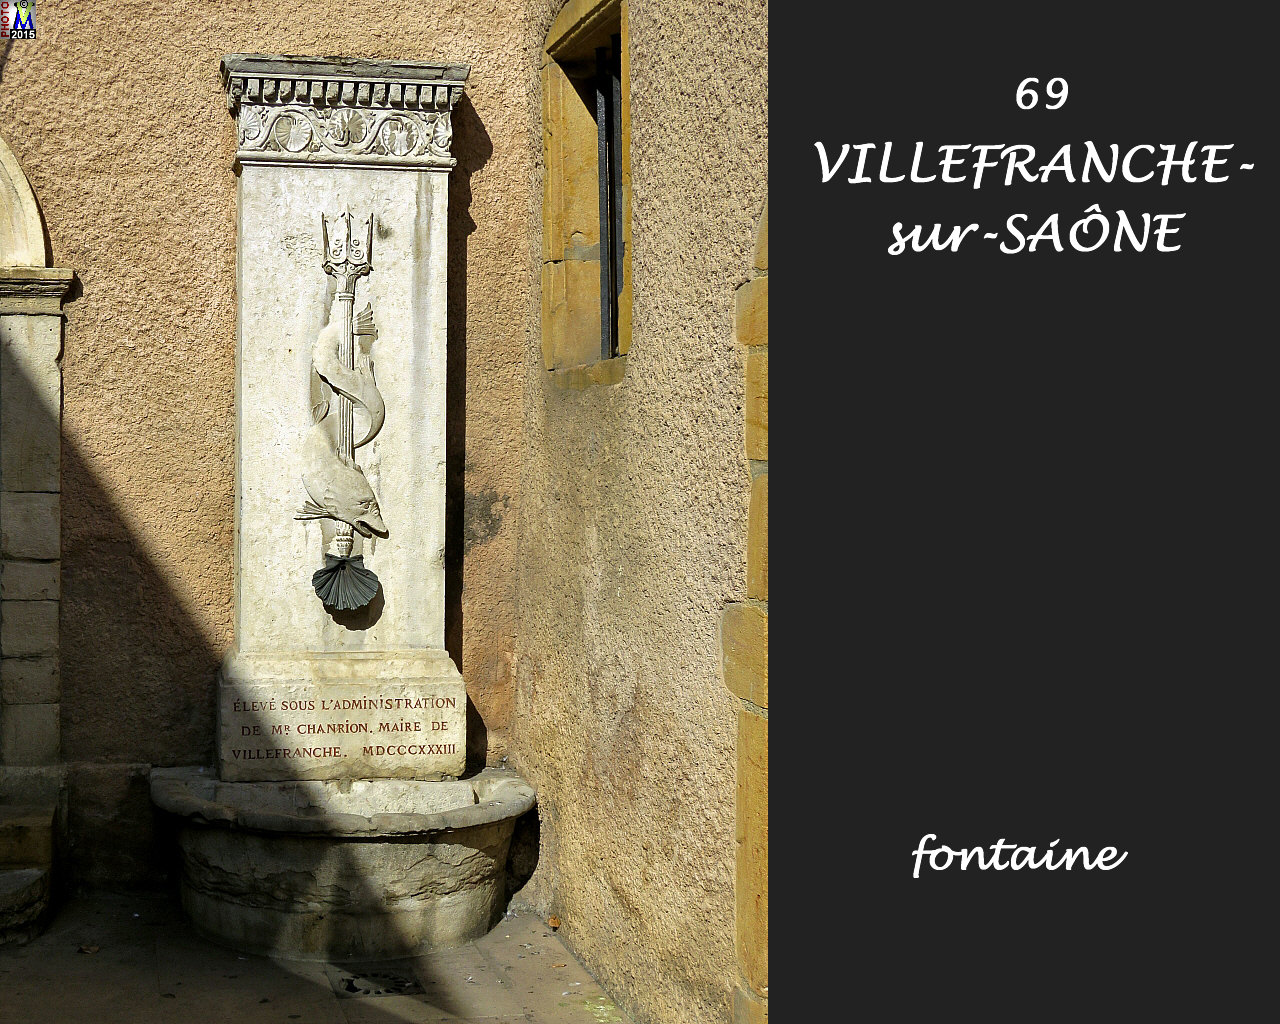 69VILLEFRANCHE-SAONE_fontaine_102.jpg